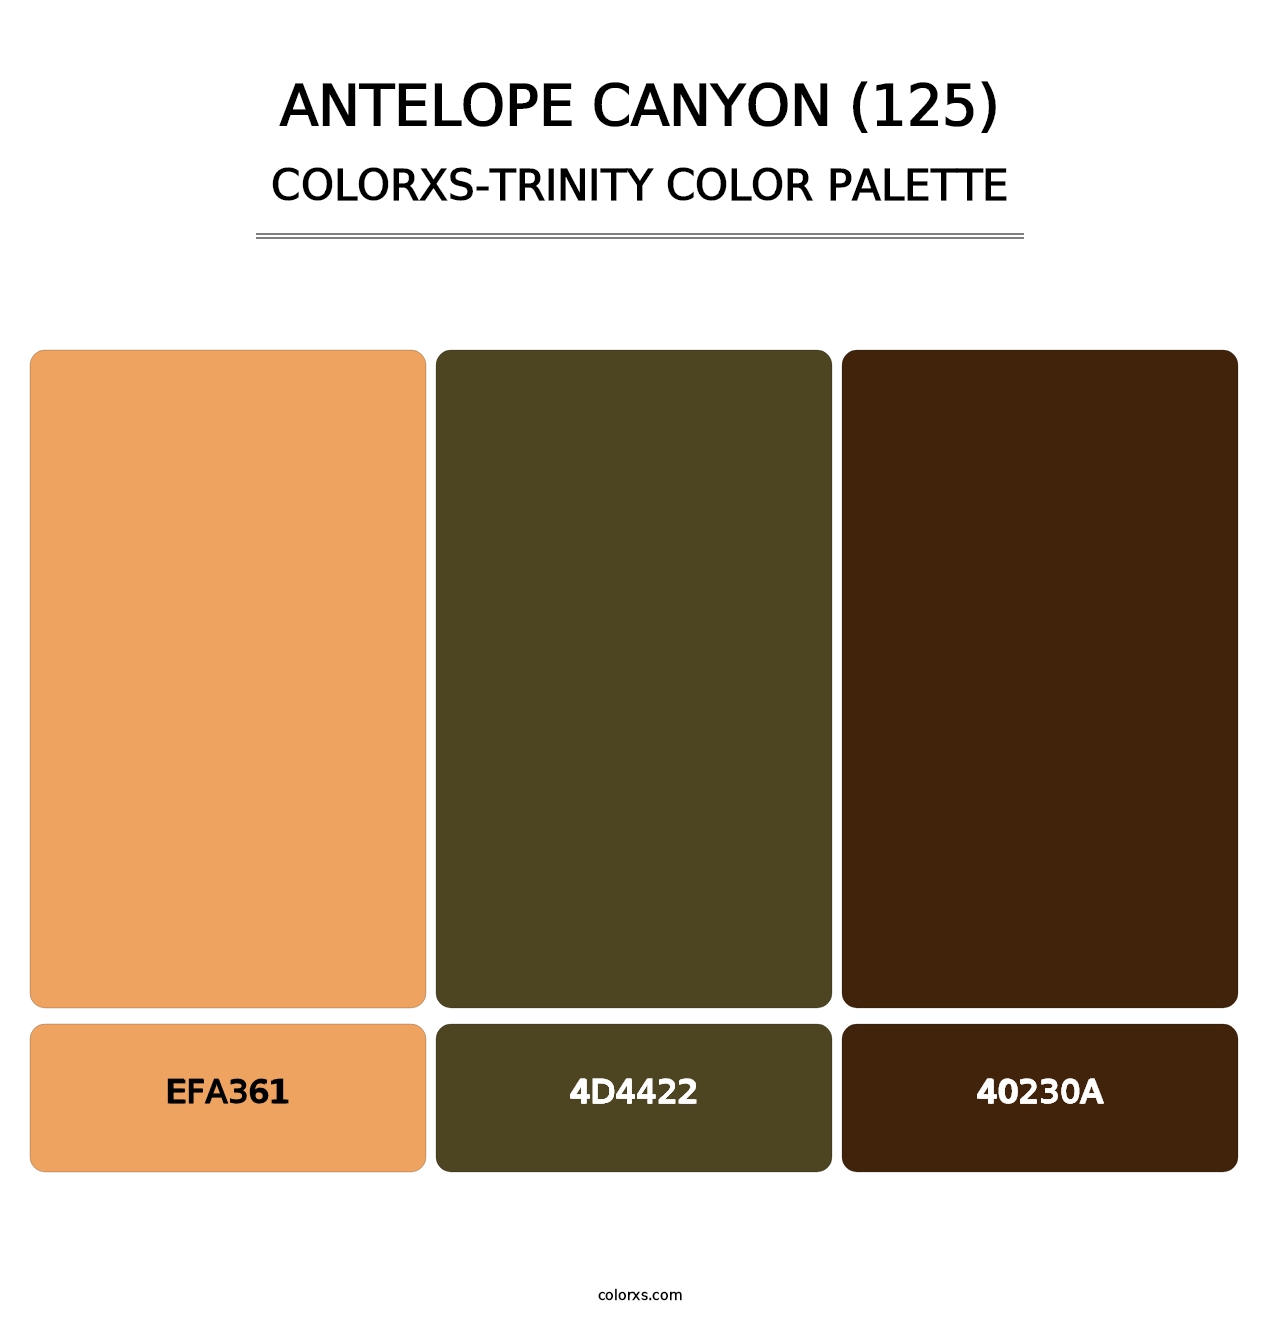 Antelope Canyon (125) - Colorxs Trinity Palette